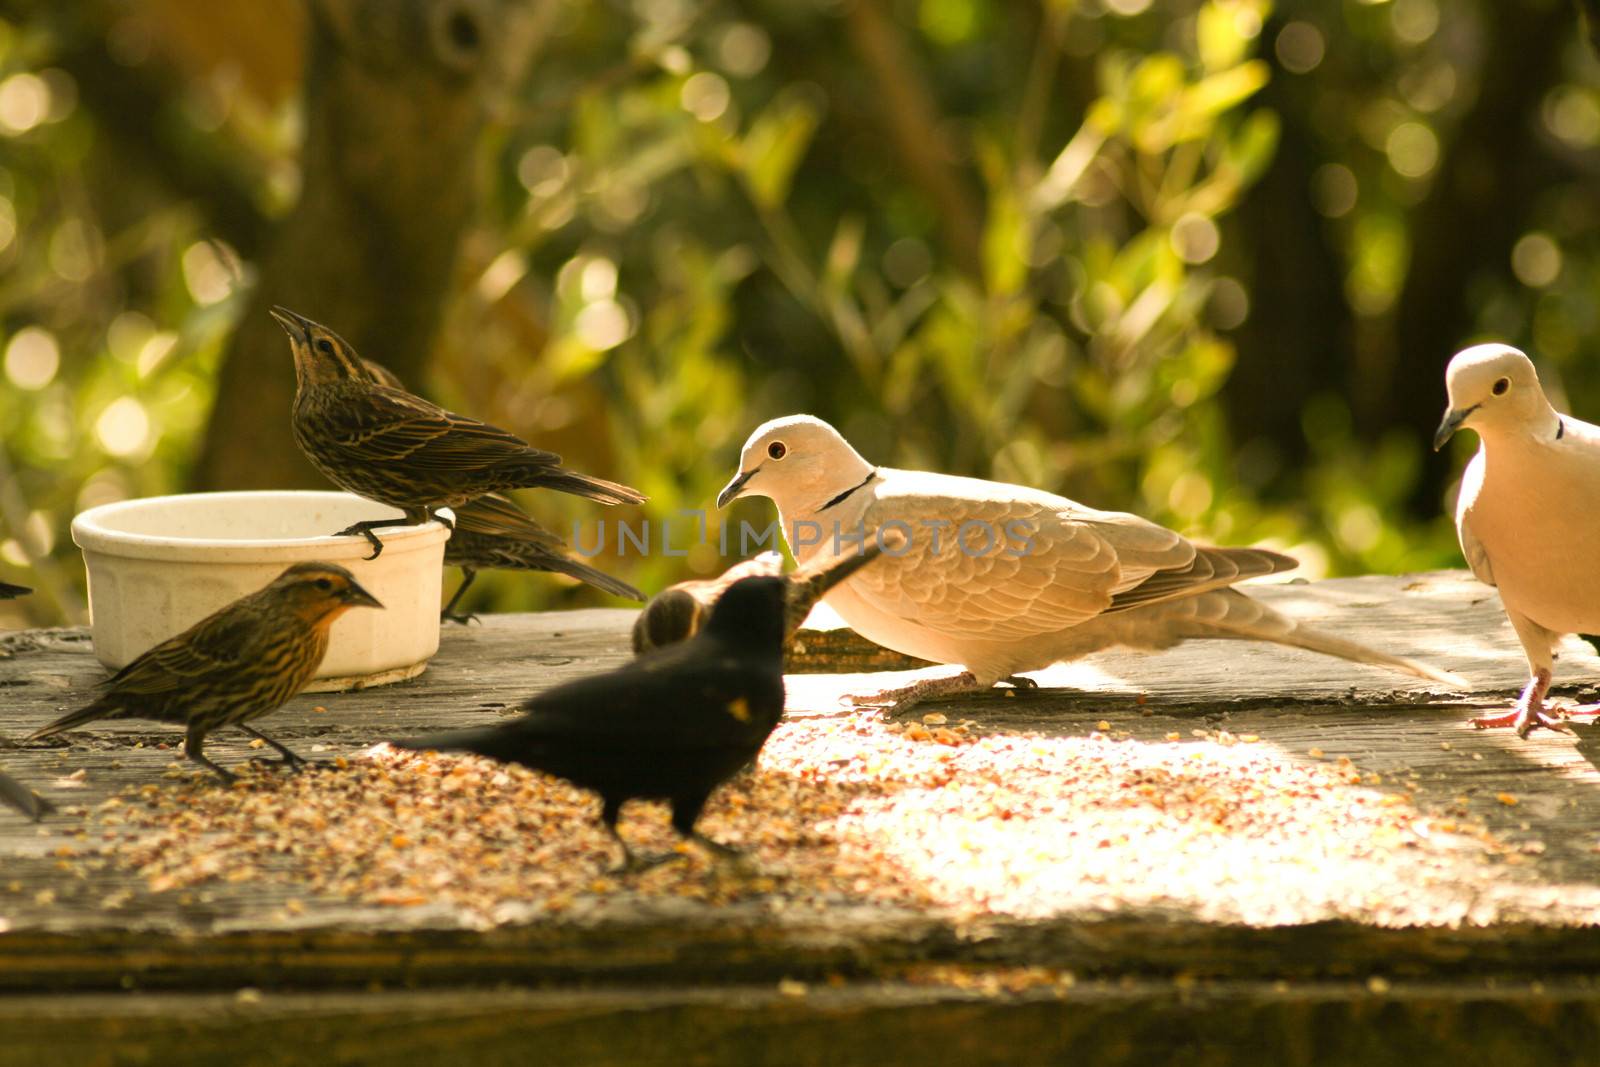 Birds feeding grains in a park by CelsoDiniz